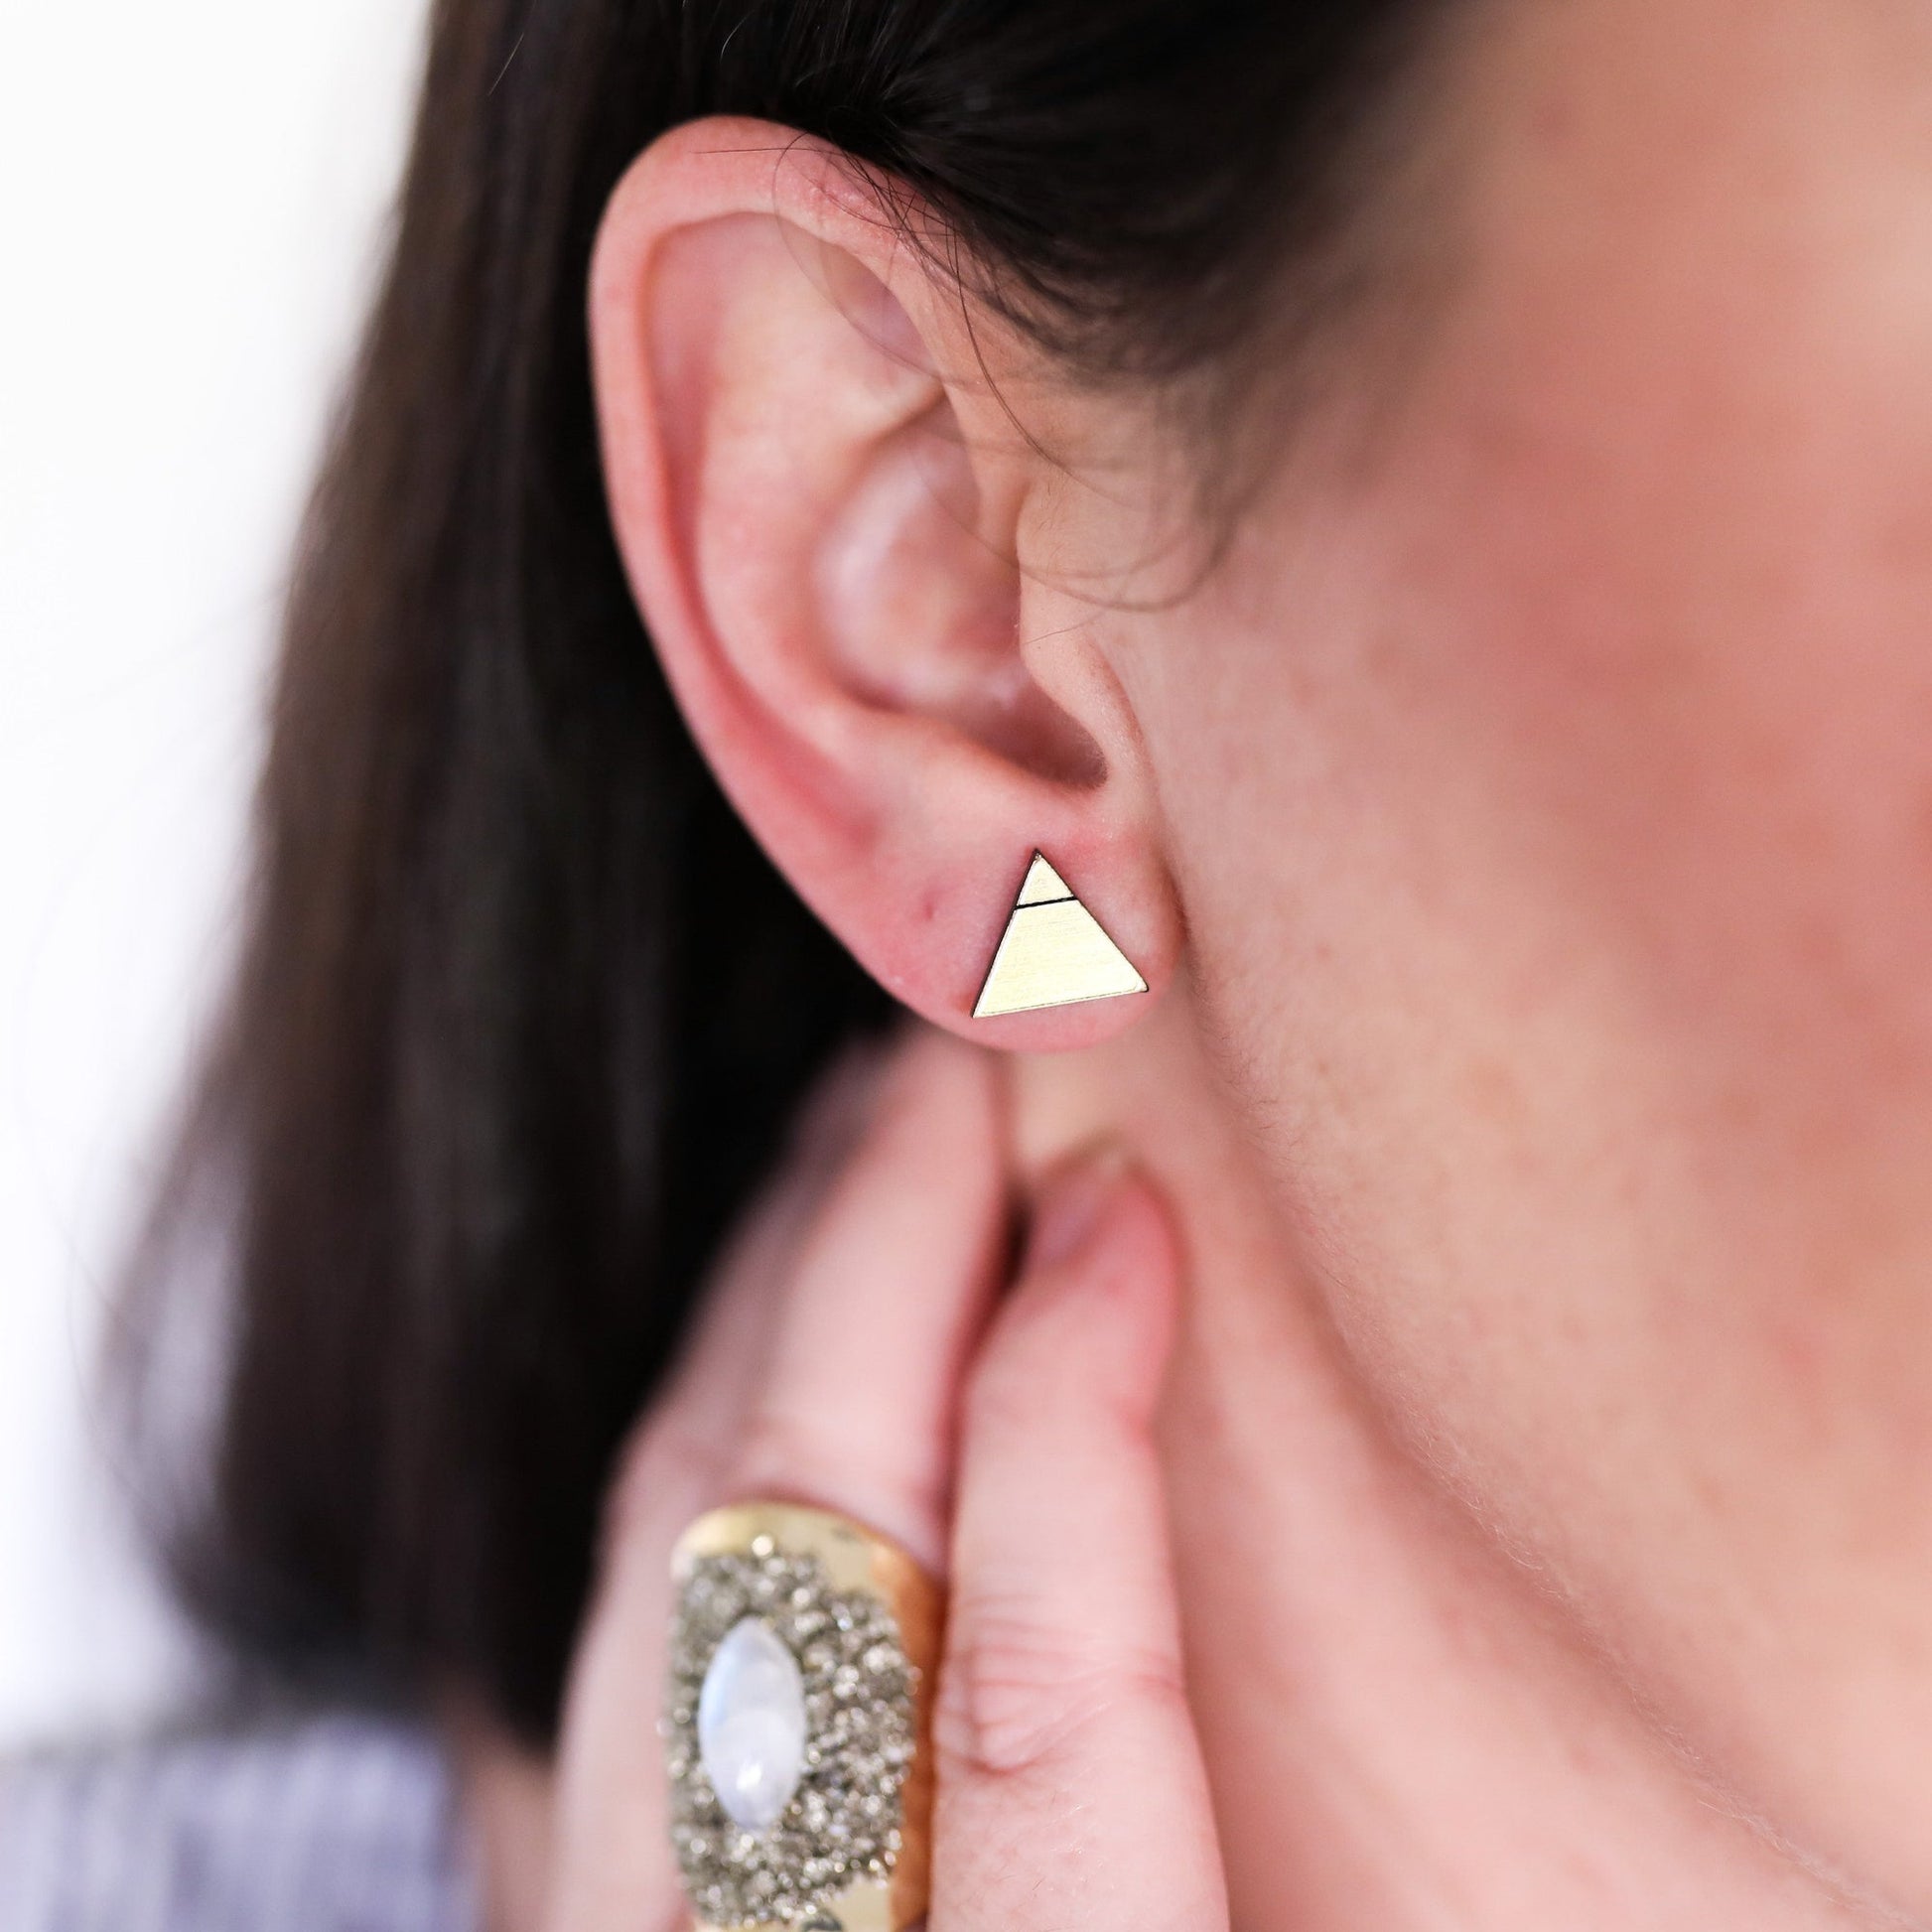 Laser Cut Geometric Earrings - Gold Acrylic GeoStud Triangles - by LeeMo Designs in Bend, Oregon